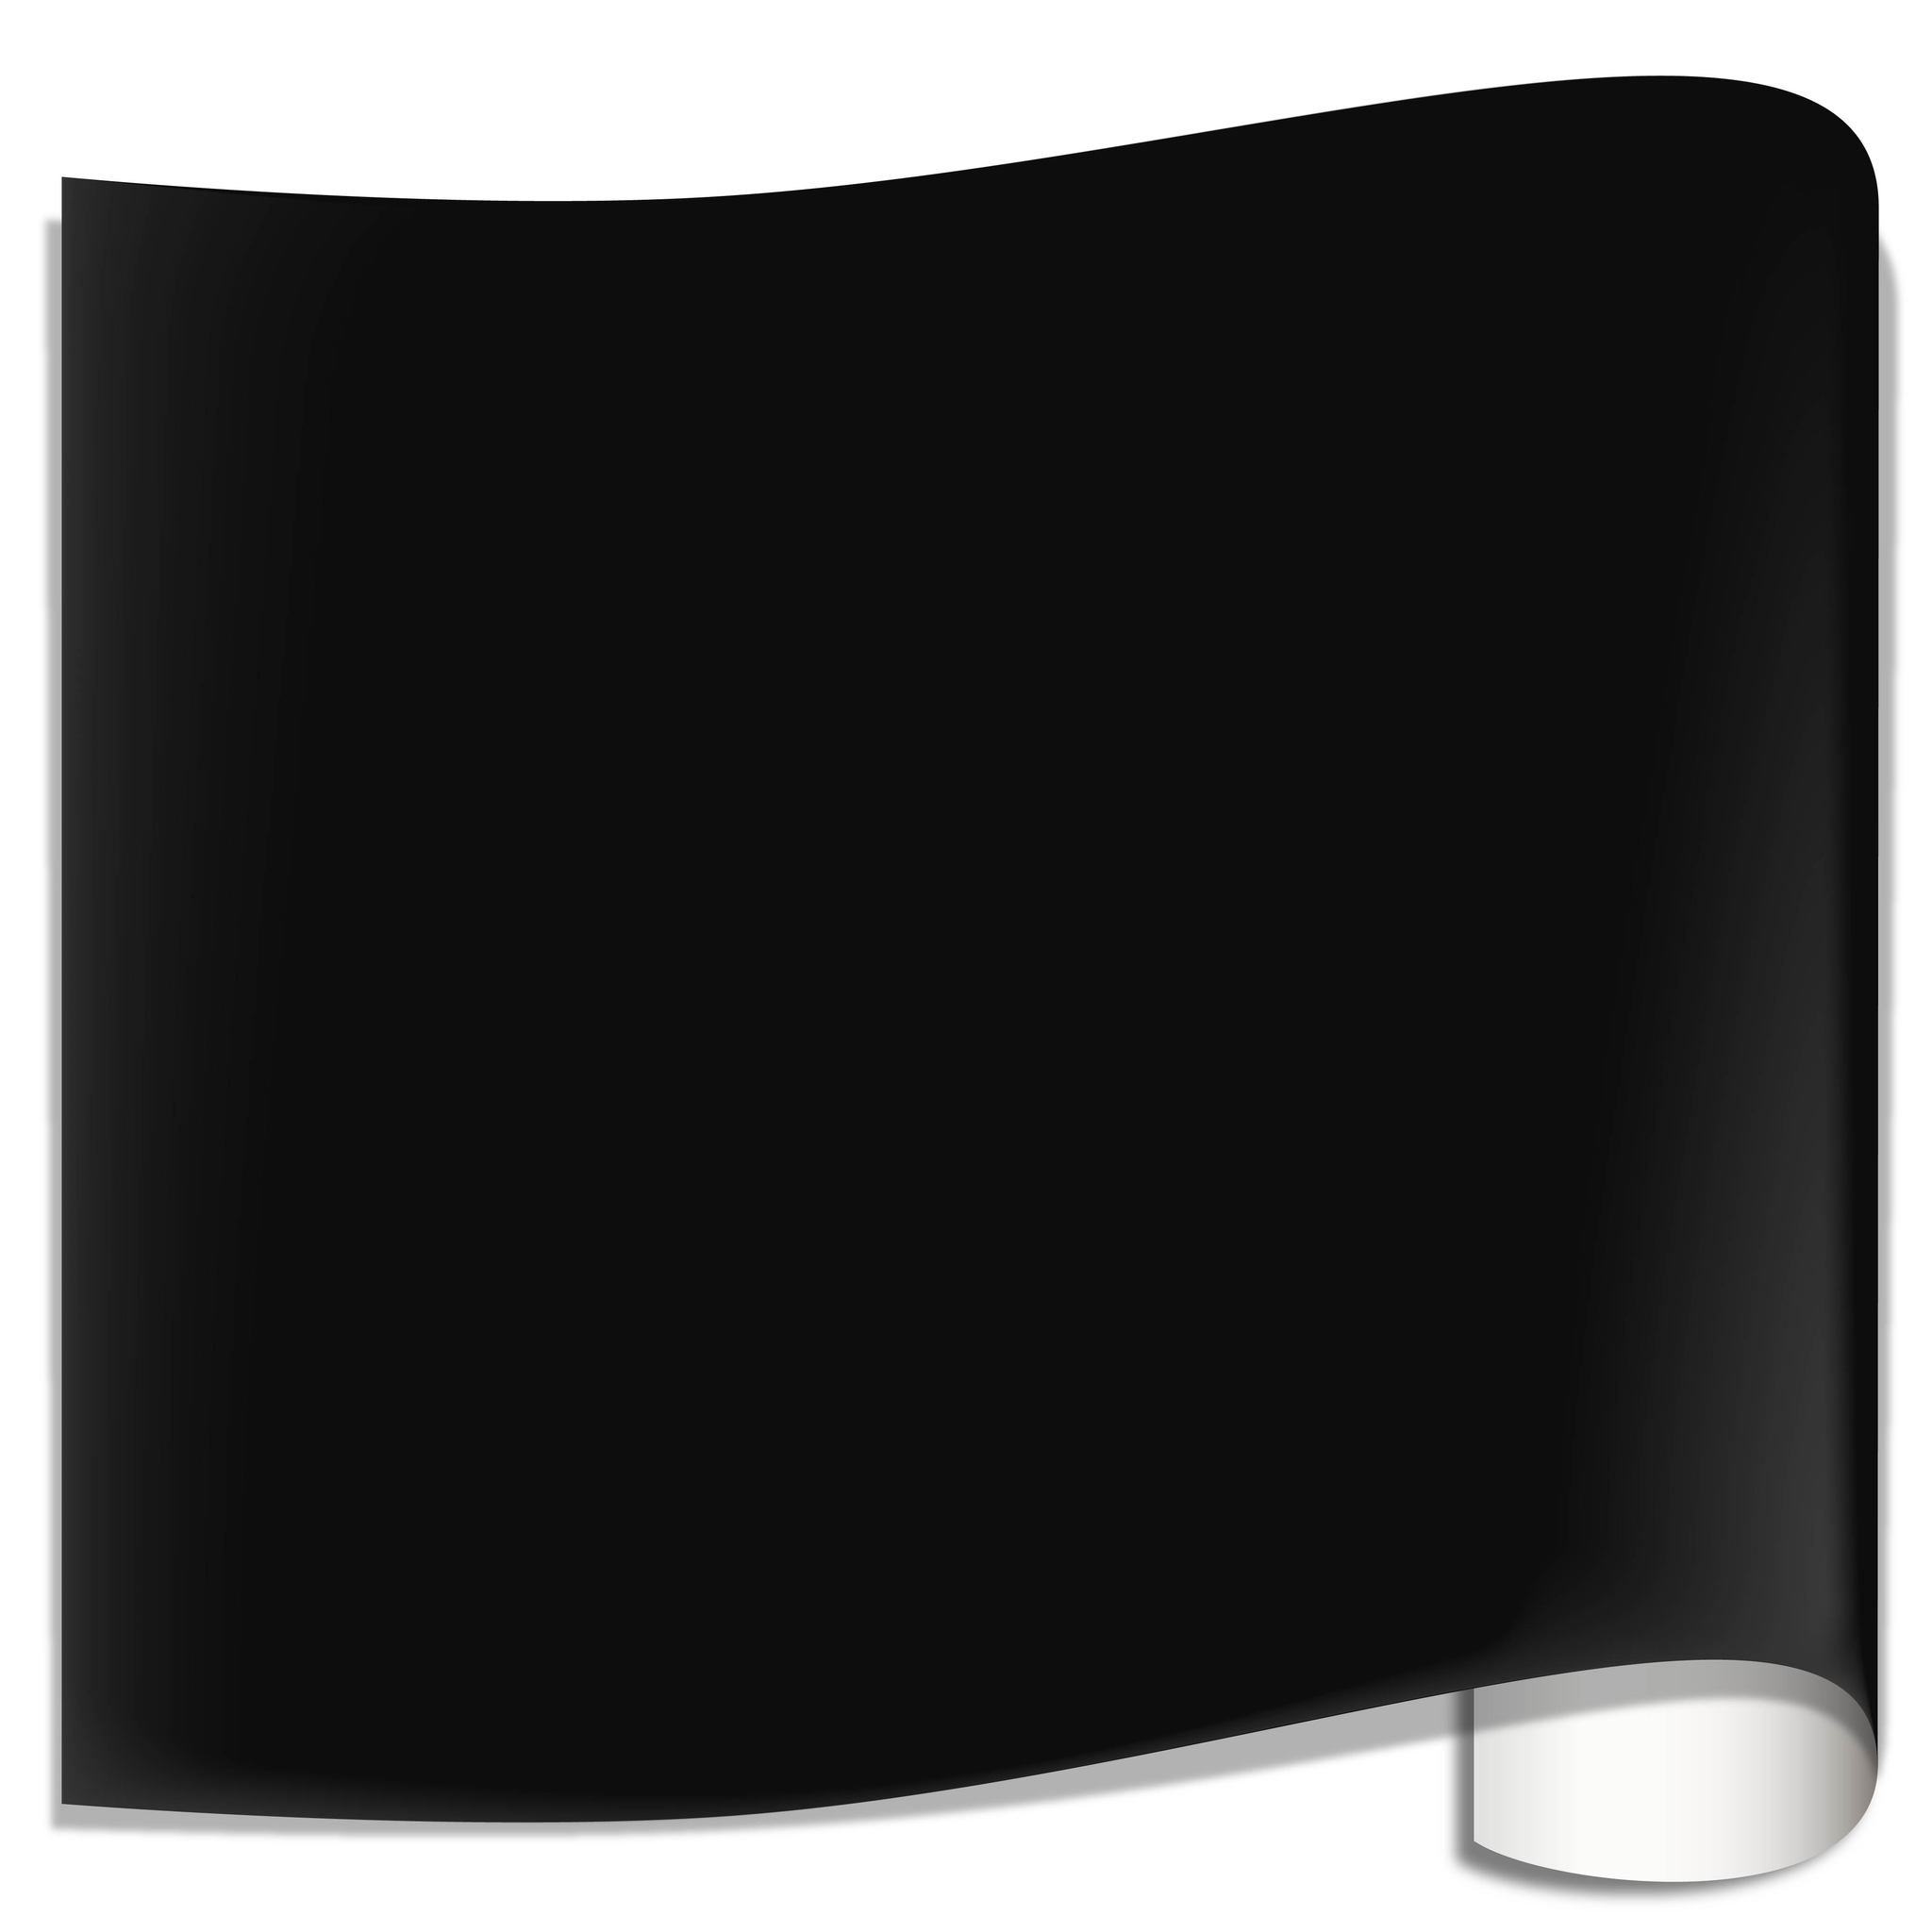 Autocolant Oracal 641 mat negru 070, 2 m x 1 m